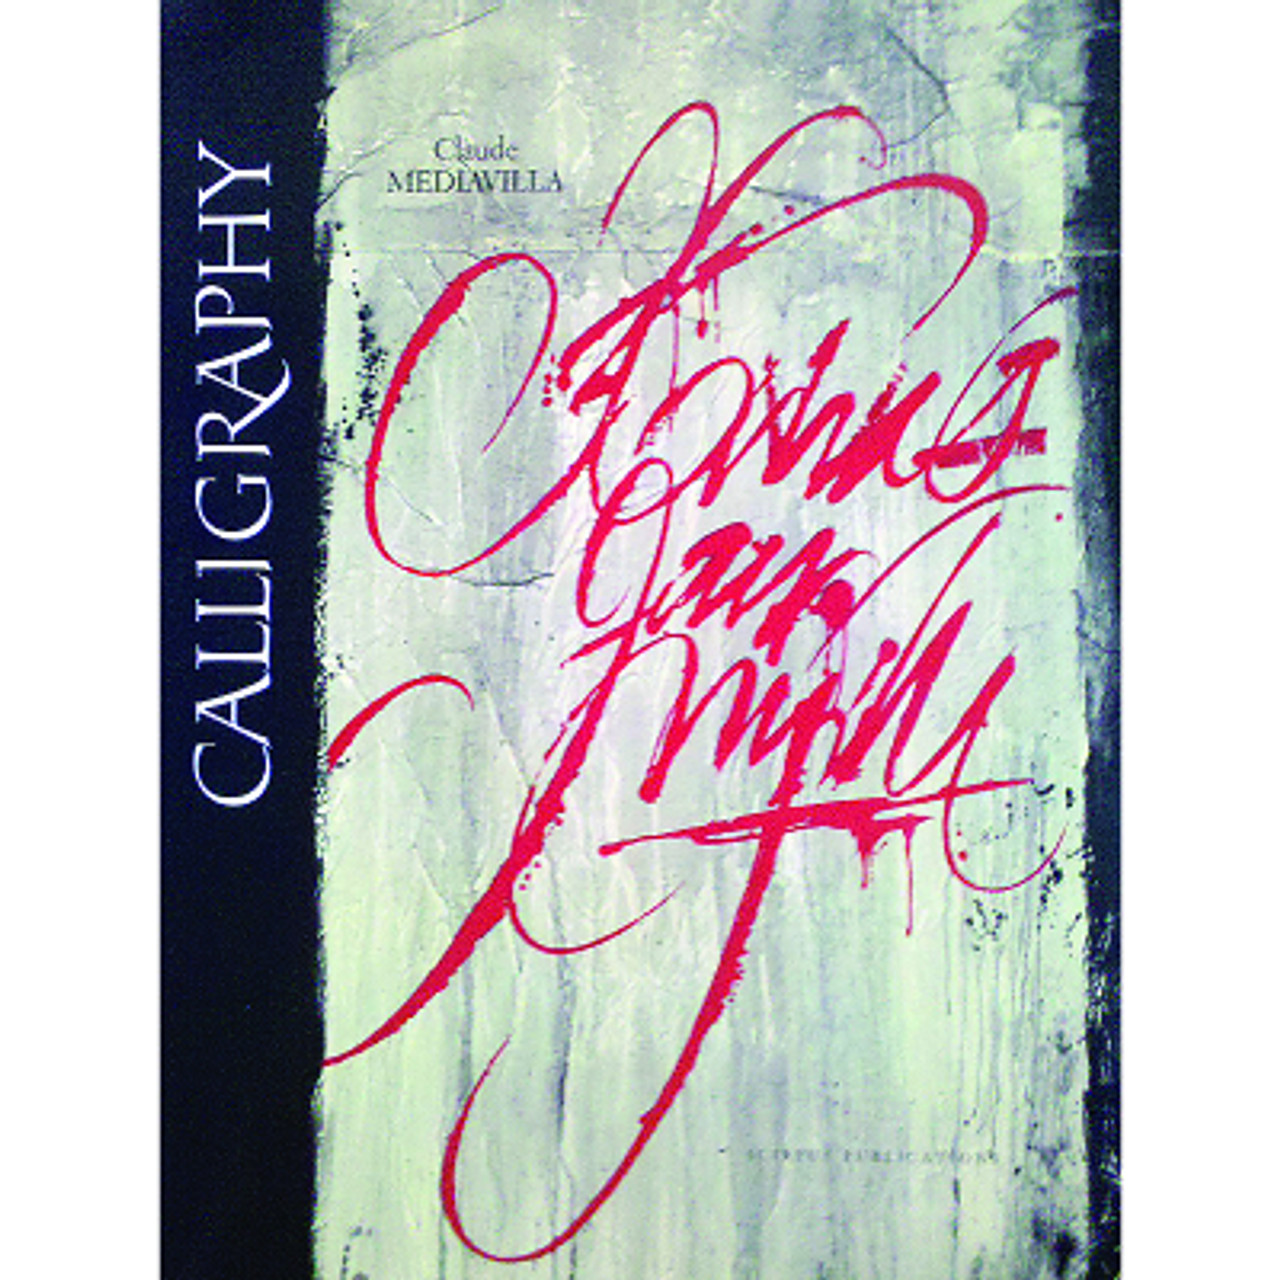 Calligraphy by Claude Mediavilla - John Neal Books